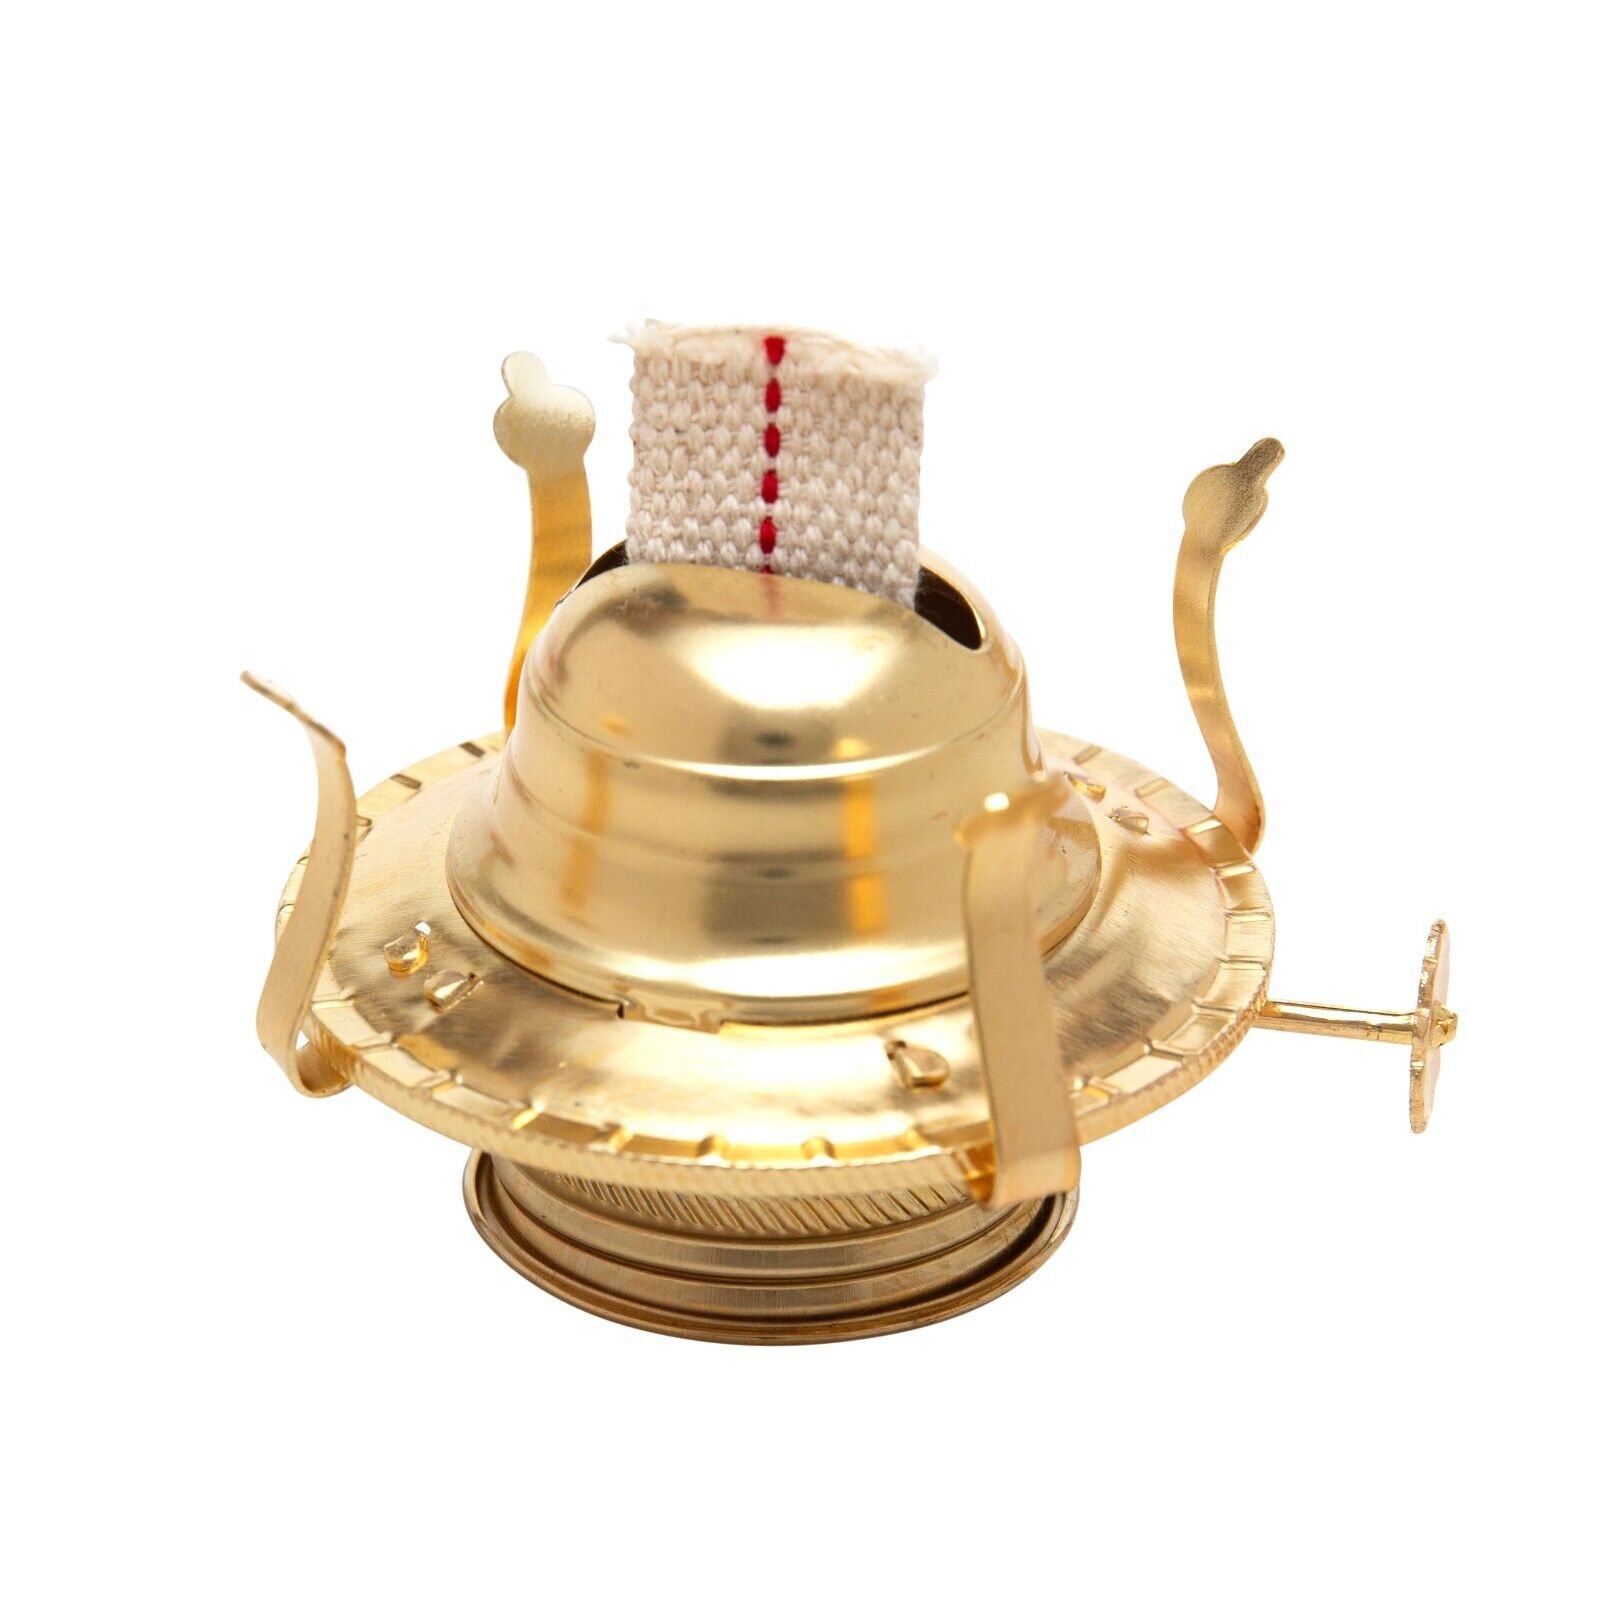 Brass Plated Oil Burner Replacement for Antique Kerosene Lamps